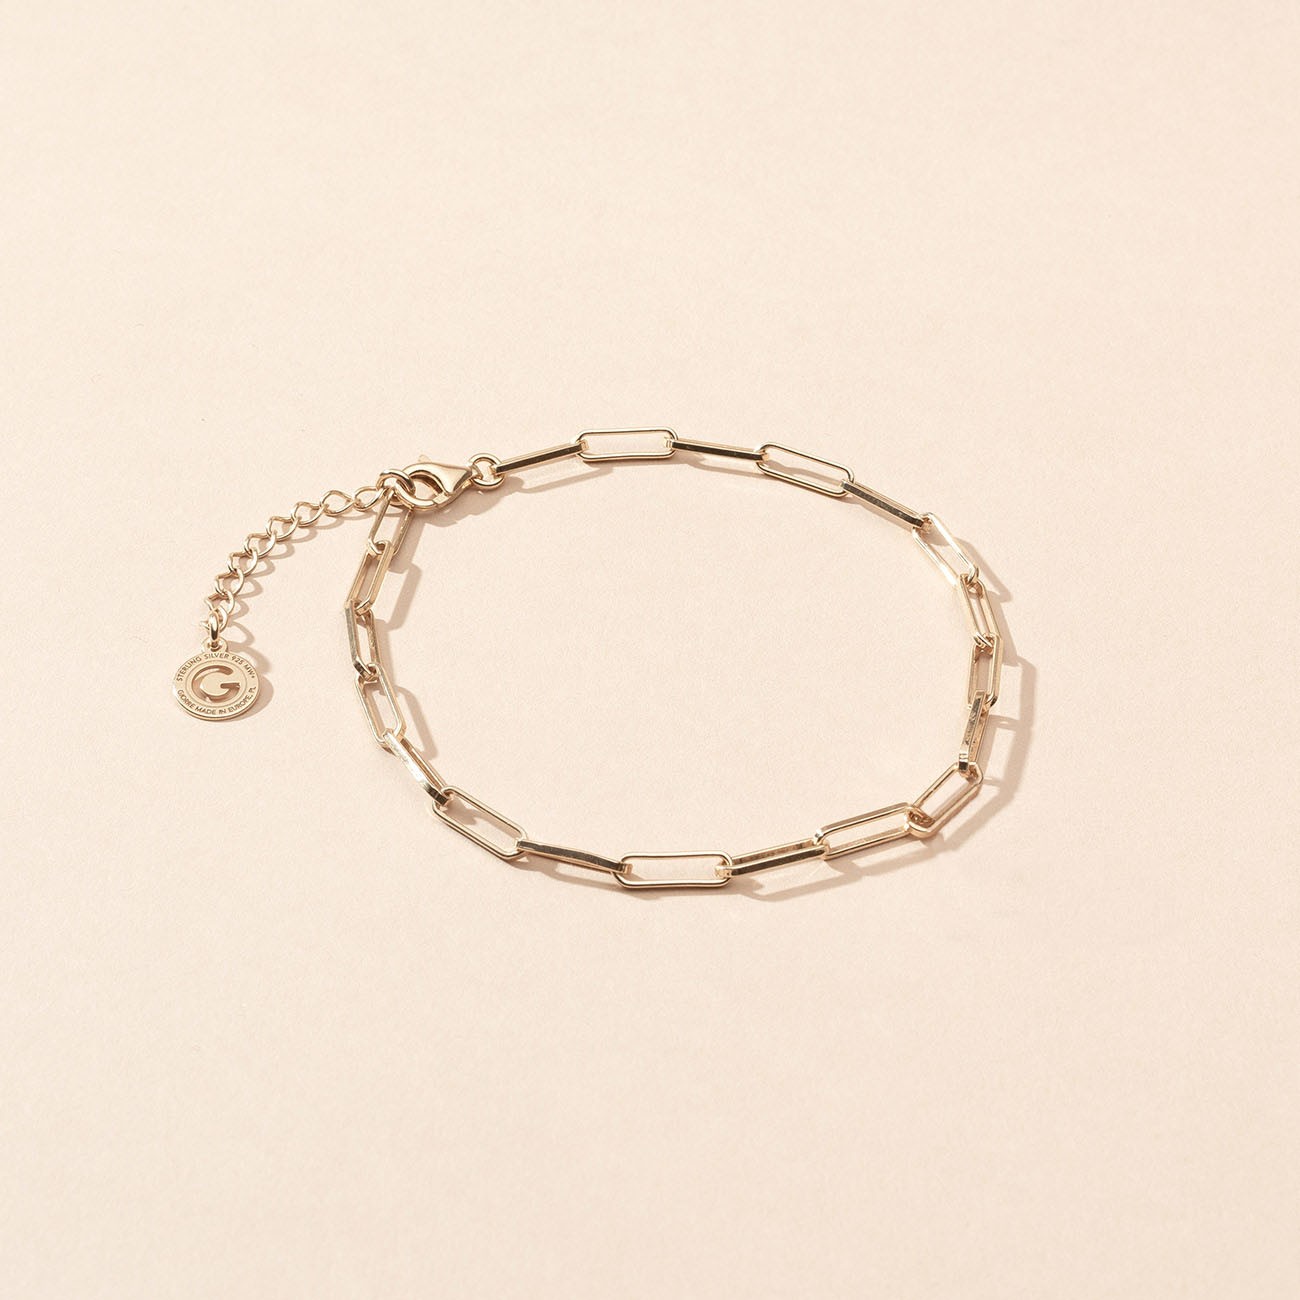 Silver bracelet charms base sterling silver 925